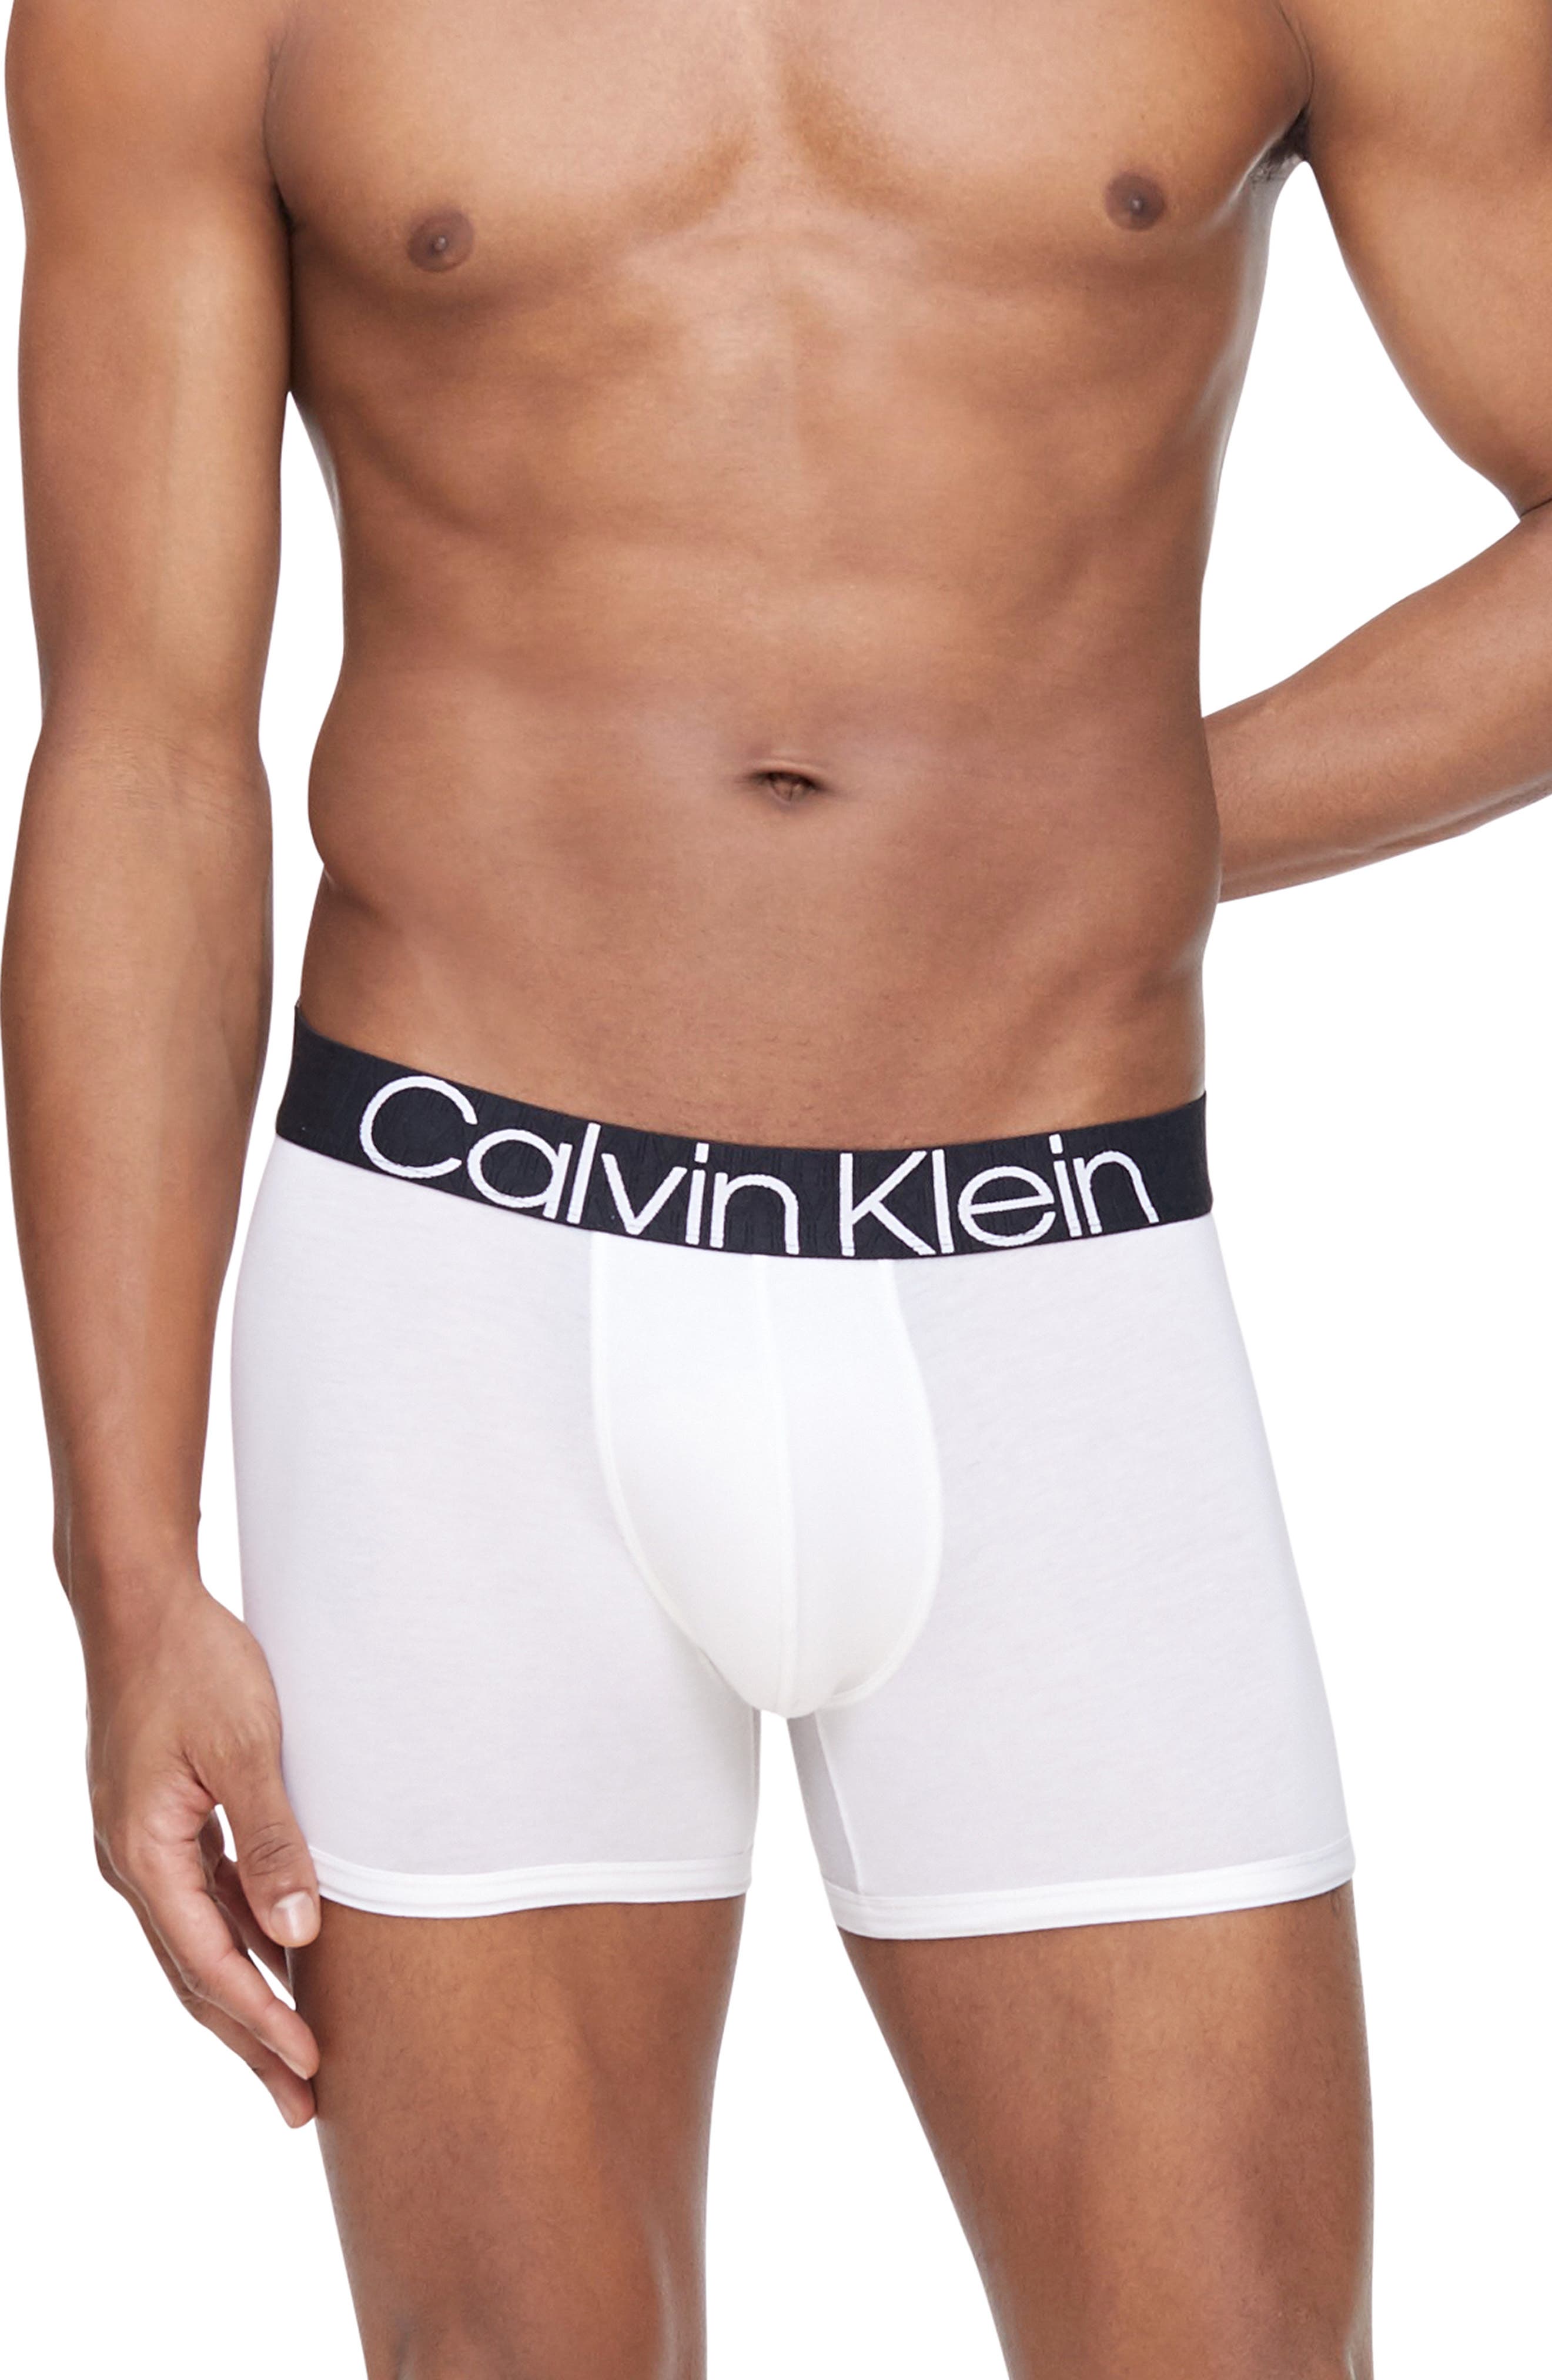 UPC 790812539408 product image for Men's Calvin Klein Eco Cotton Blend Boxer Briefs, Size Small - White | upcitemdb.com